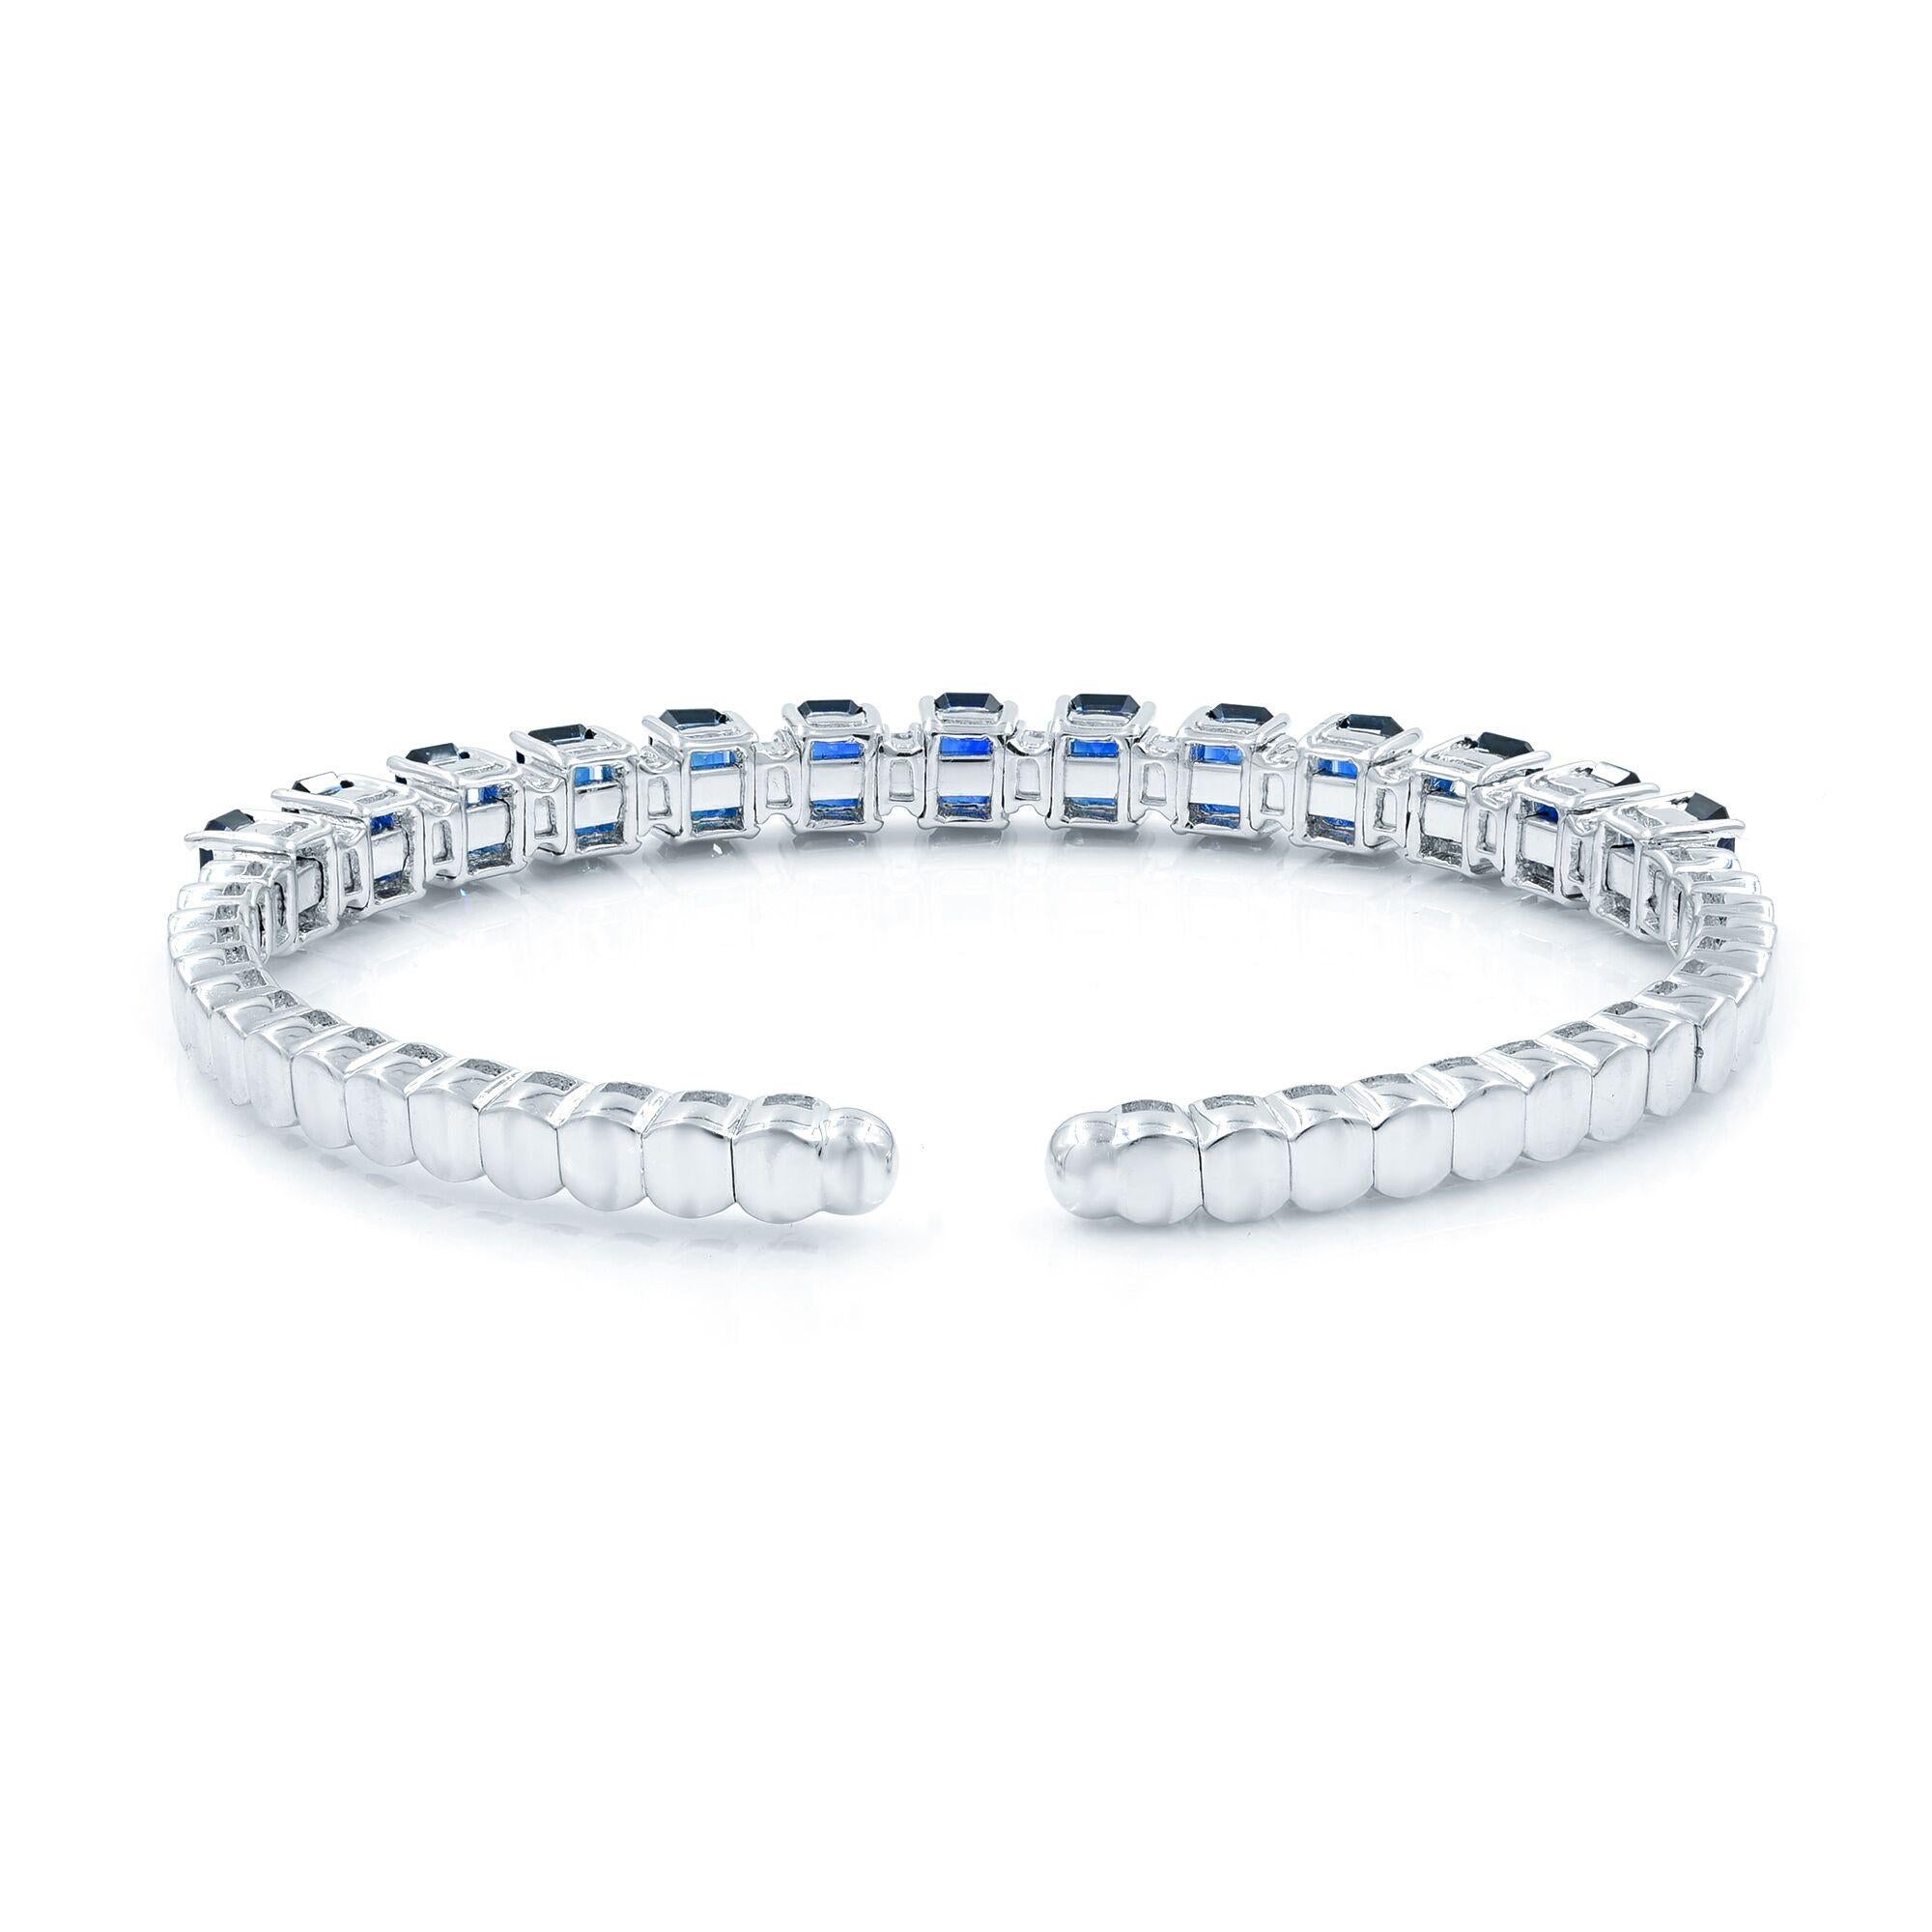 Emerald Cut Blue Sapphire 10.20Cttw And Diamond 1.20Cttw Bangle Bracelet 18K White Gold  For Sale